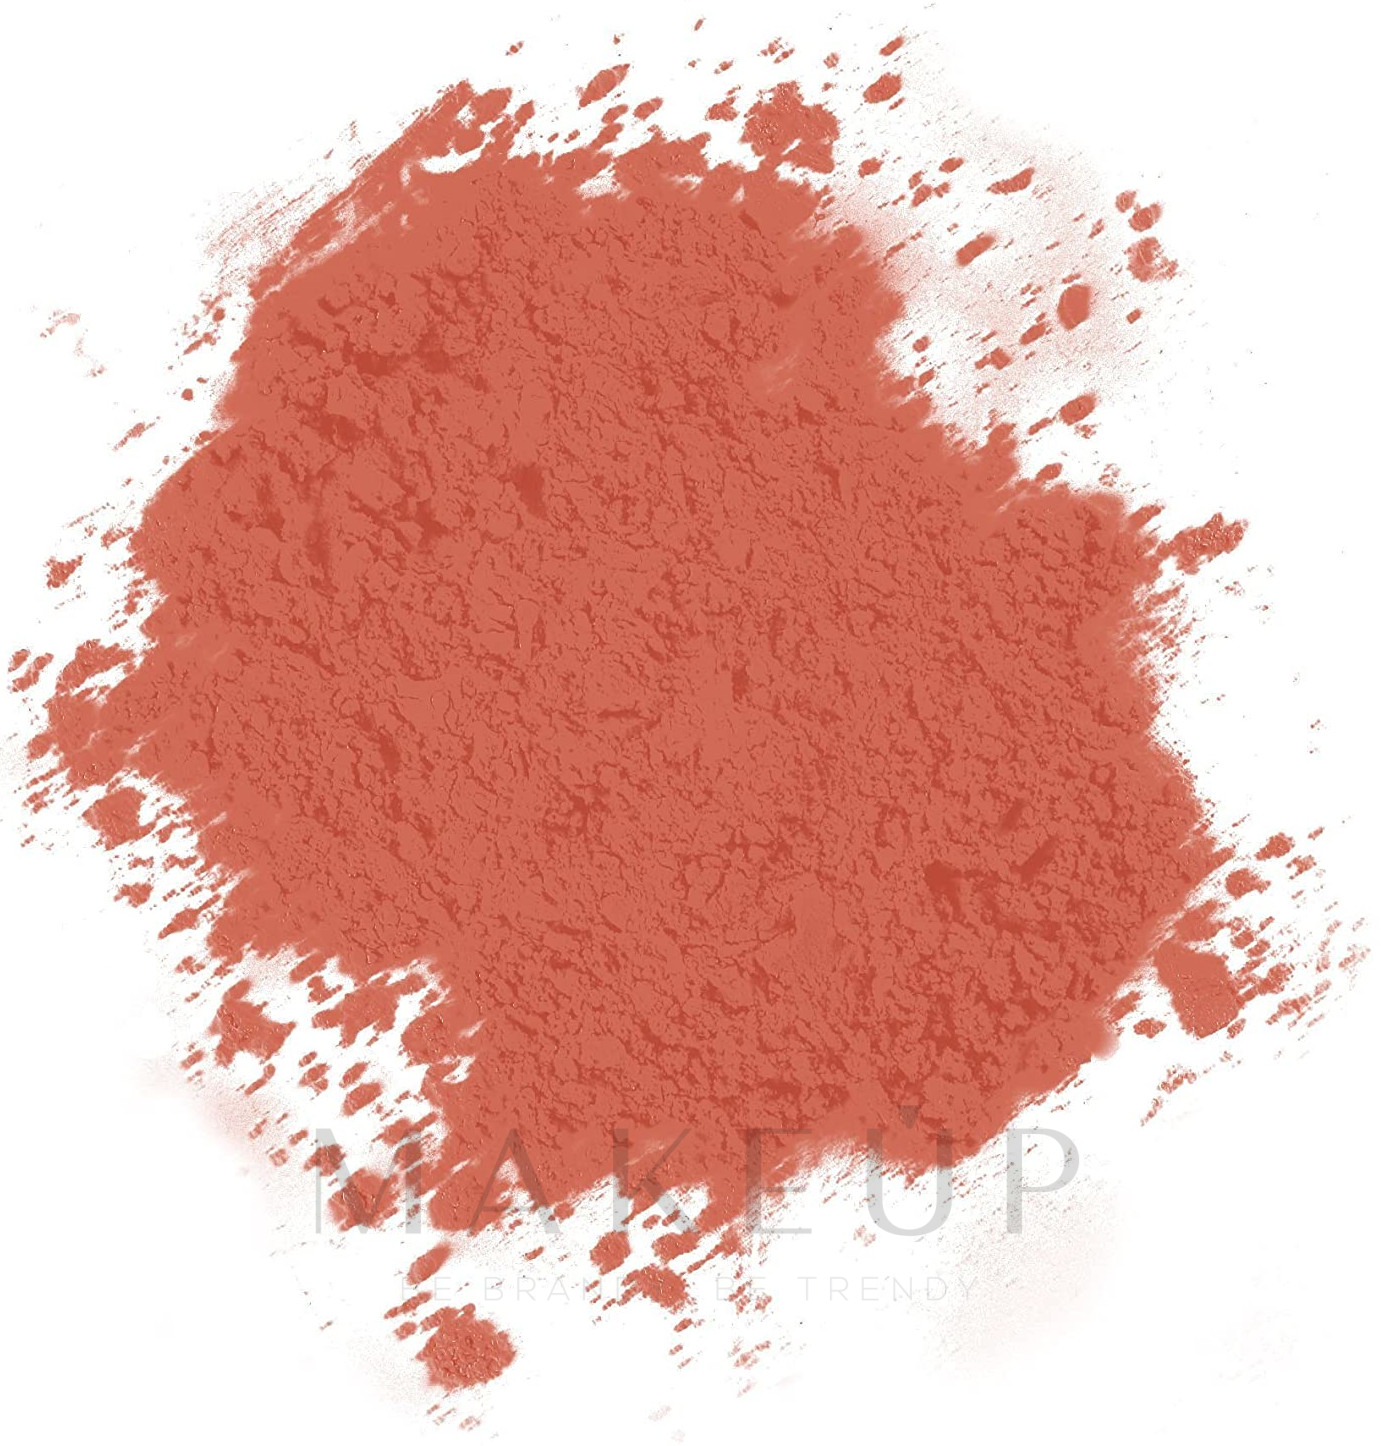 Gesichtsrouge mit Pinsel - Beauty UK Blush & Brush — Bild 4 - Rustic Peach